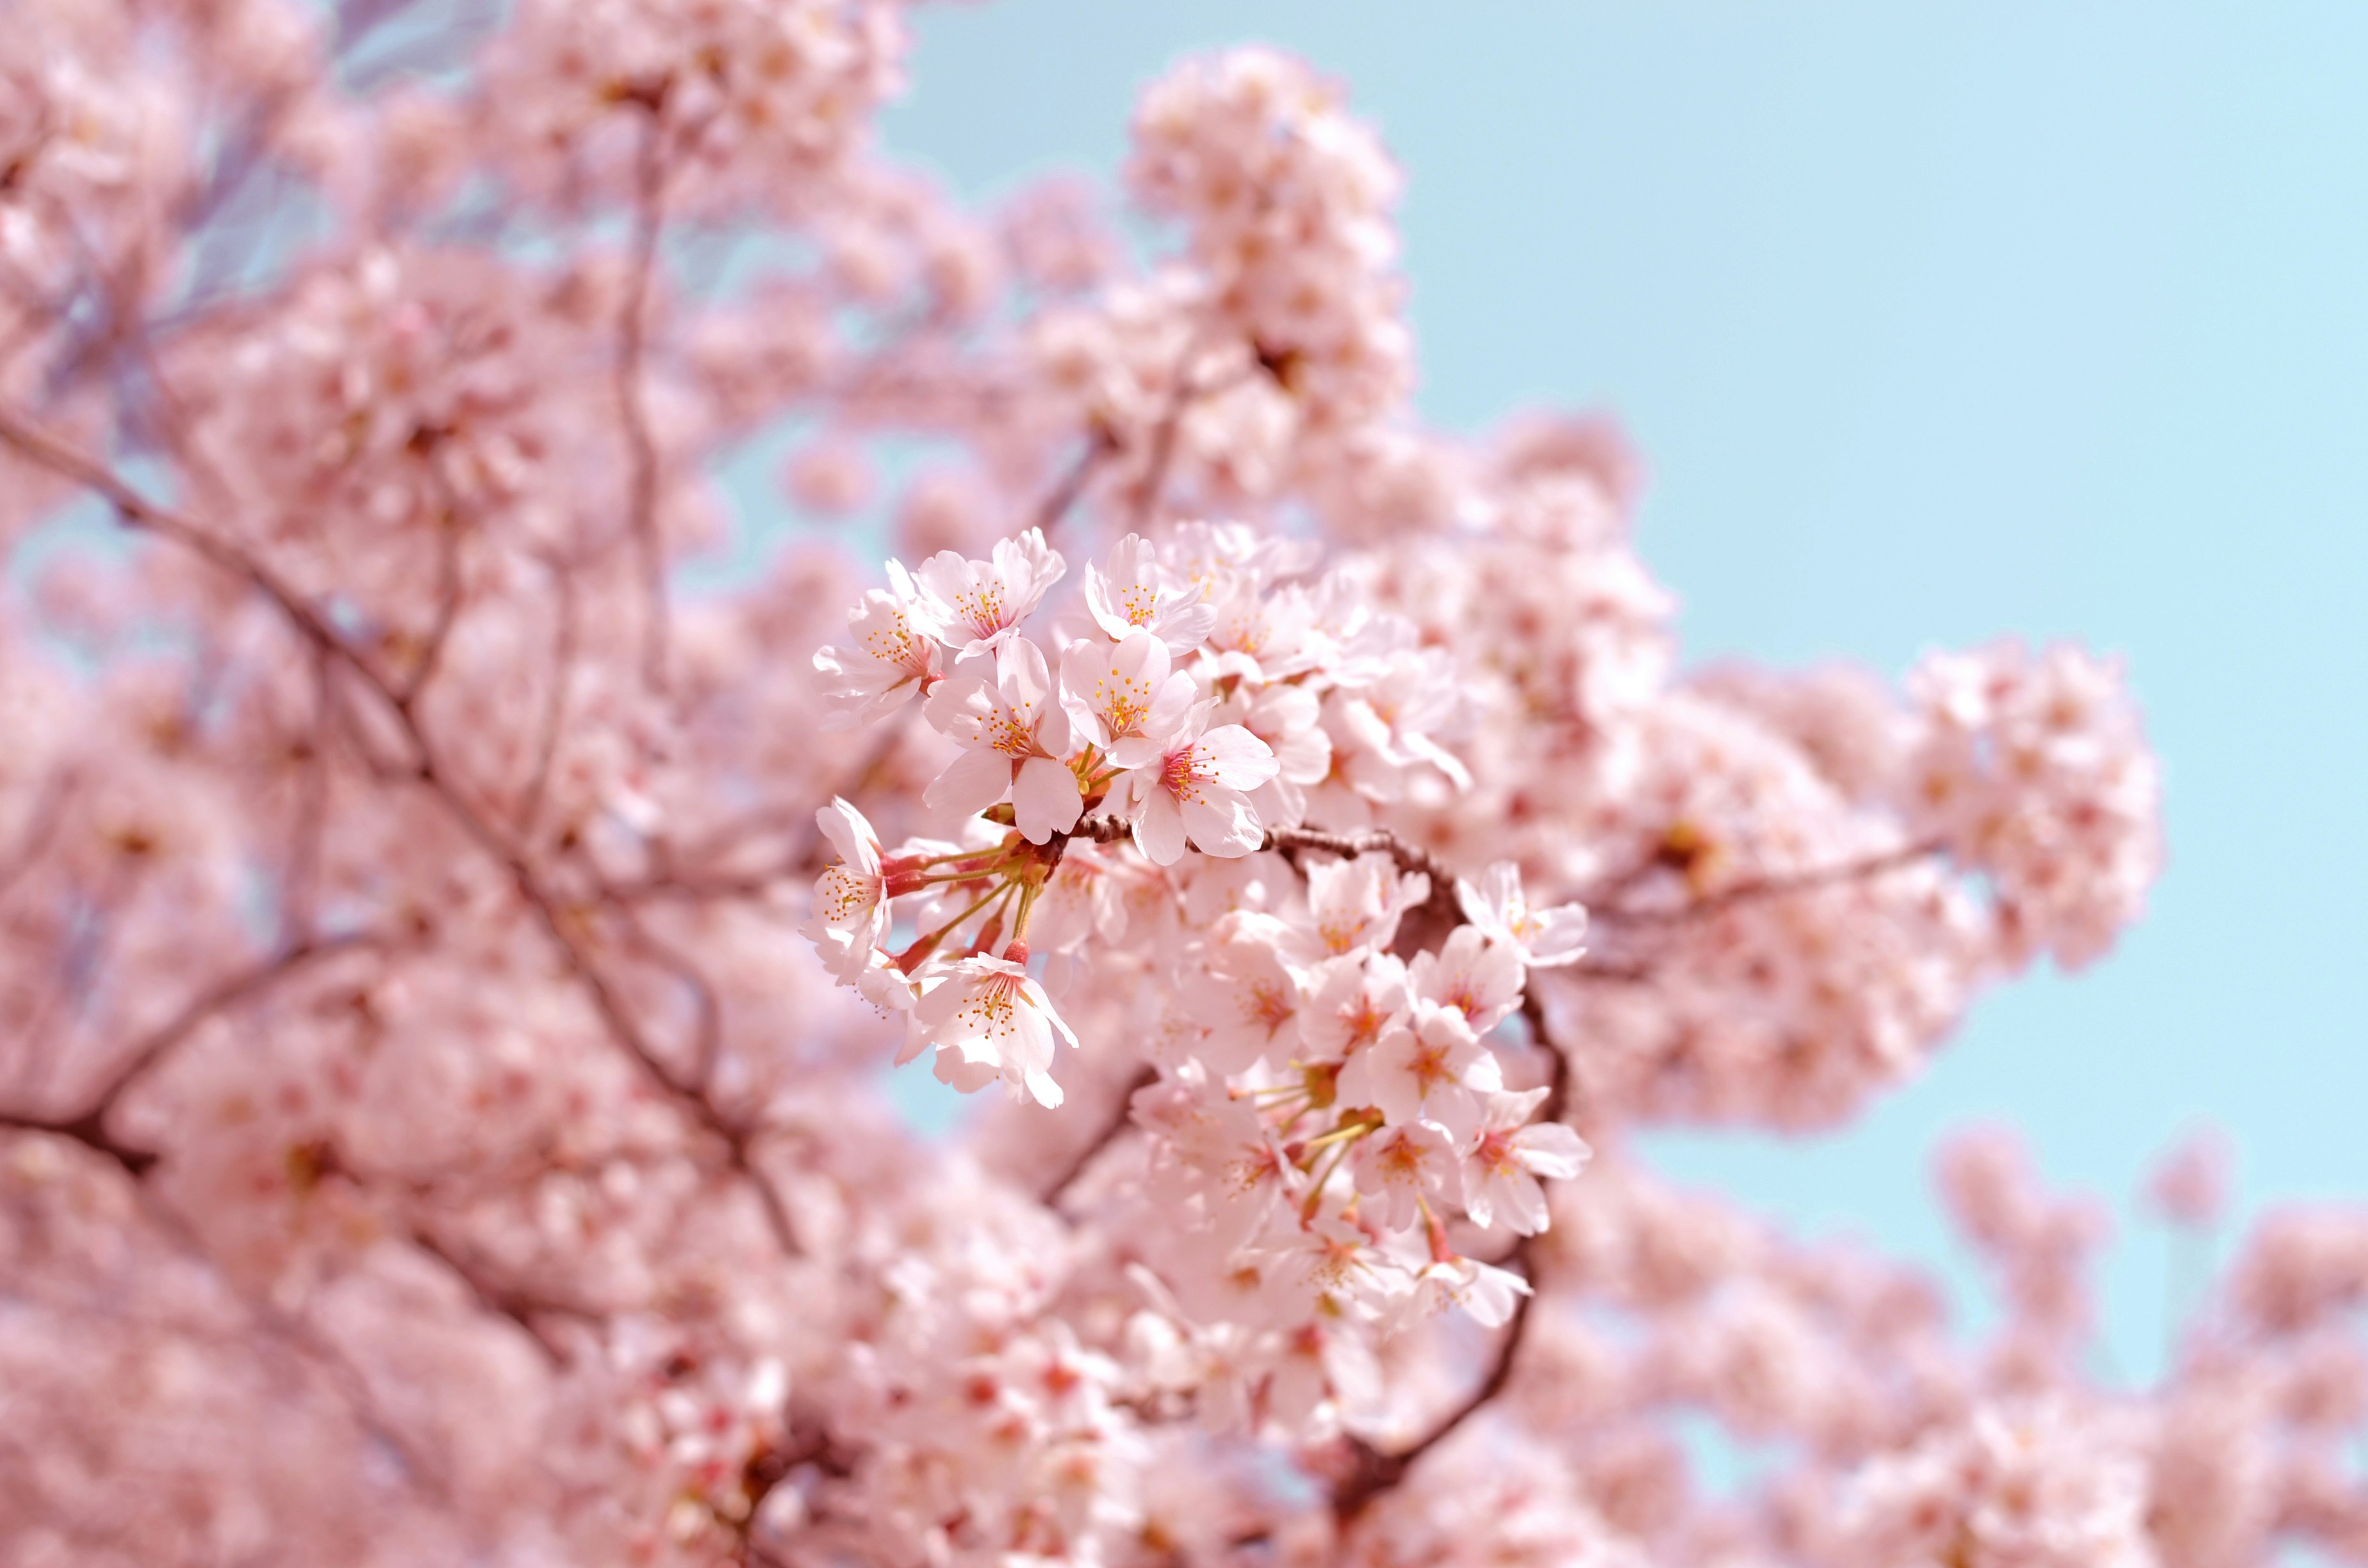 Download 21 Cherry-blossom-night-wallpaper Cherry-blossom-1080P,-2K,-4K,-5K-HD-wallpapers-free-download-.jpg